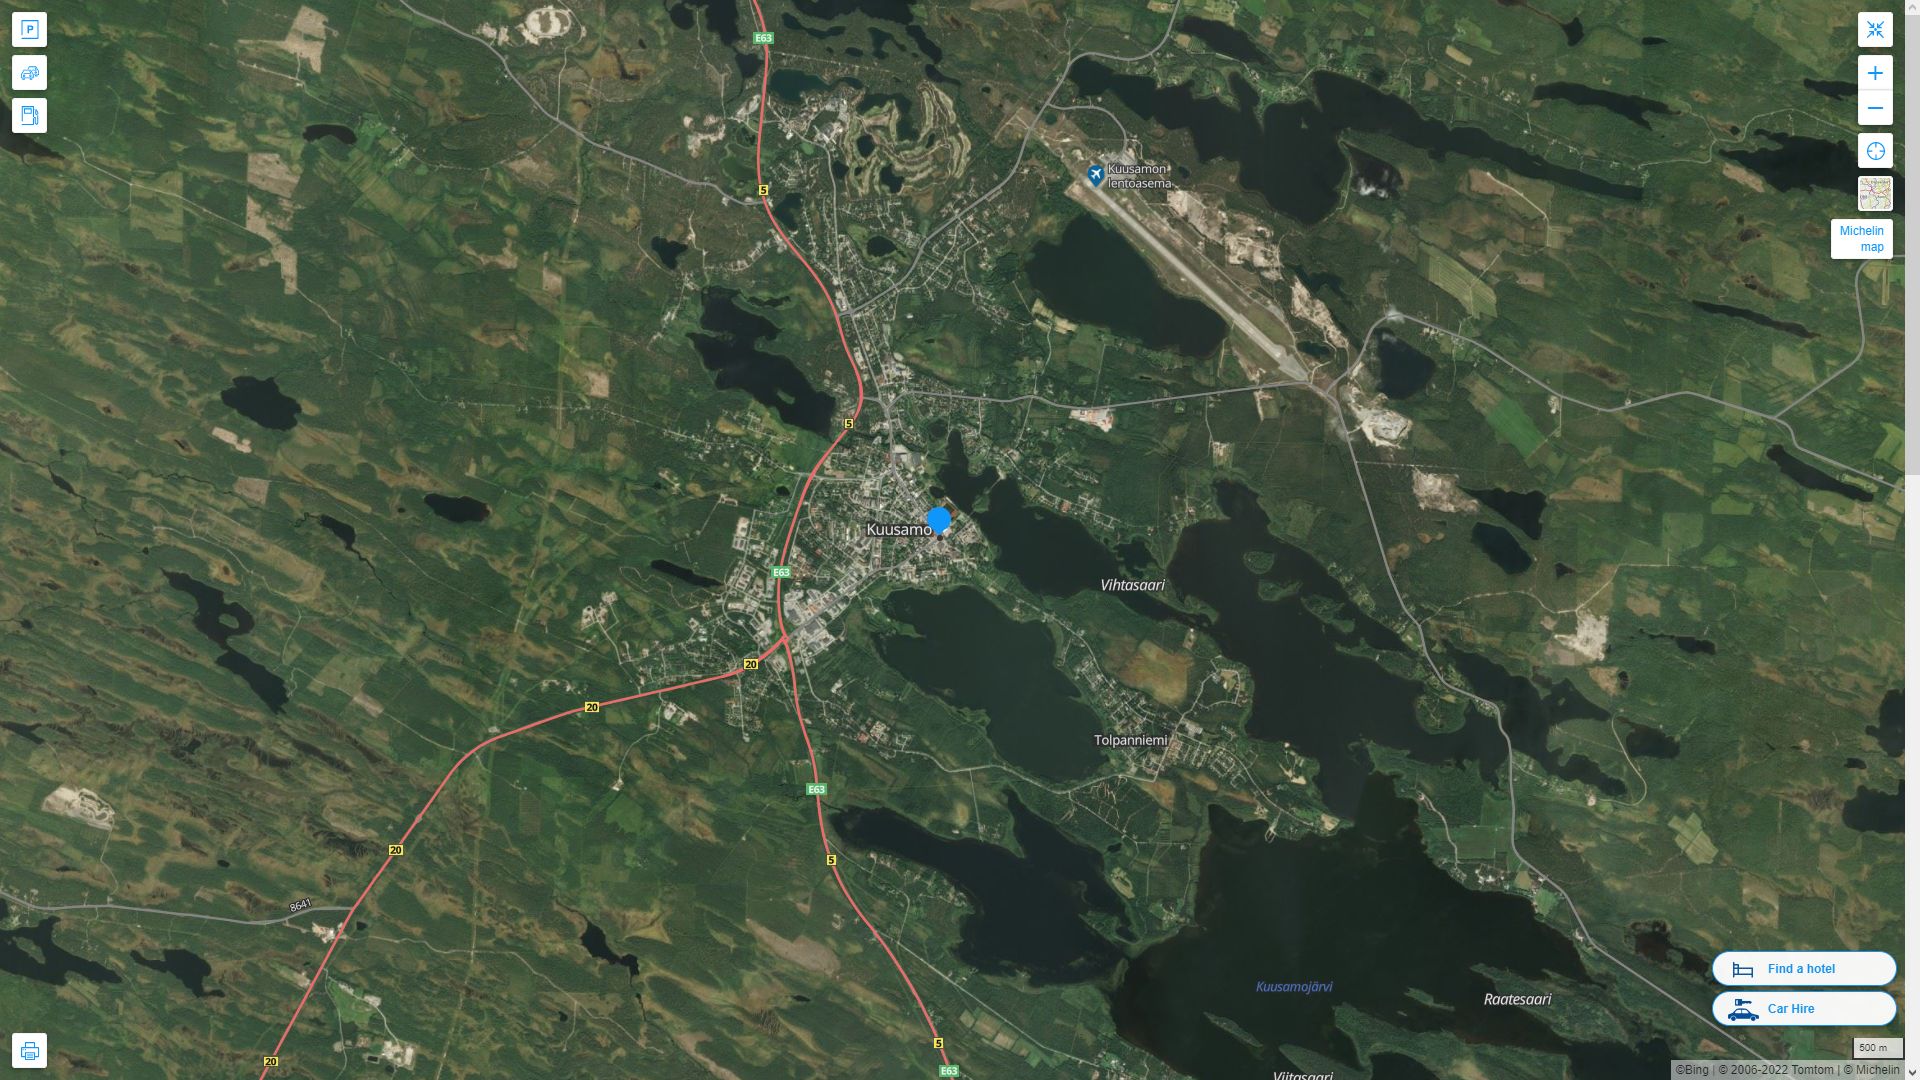 Kuusamo Finlande Autoroute et carte routiere avec vue satellite